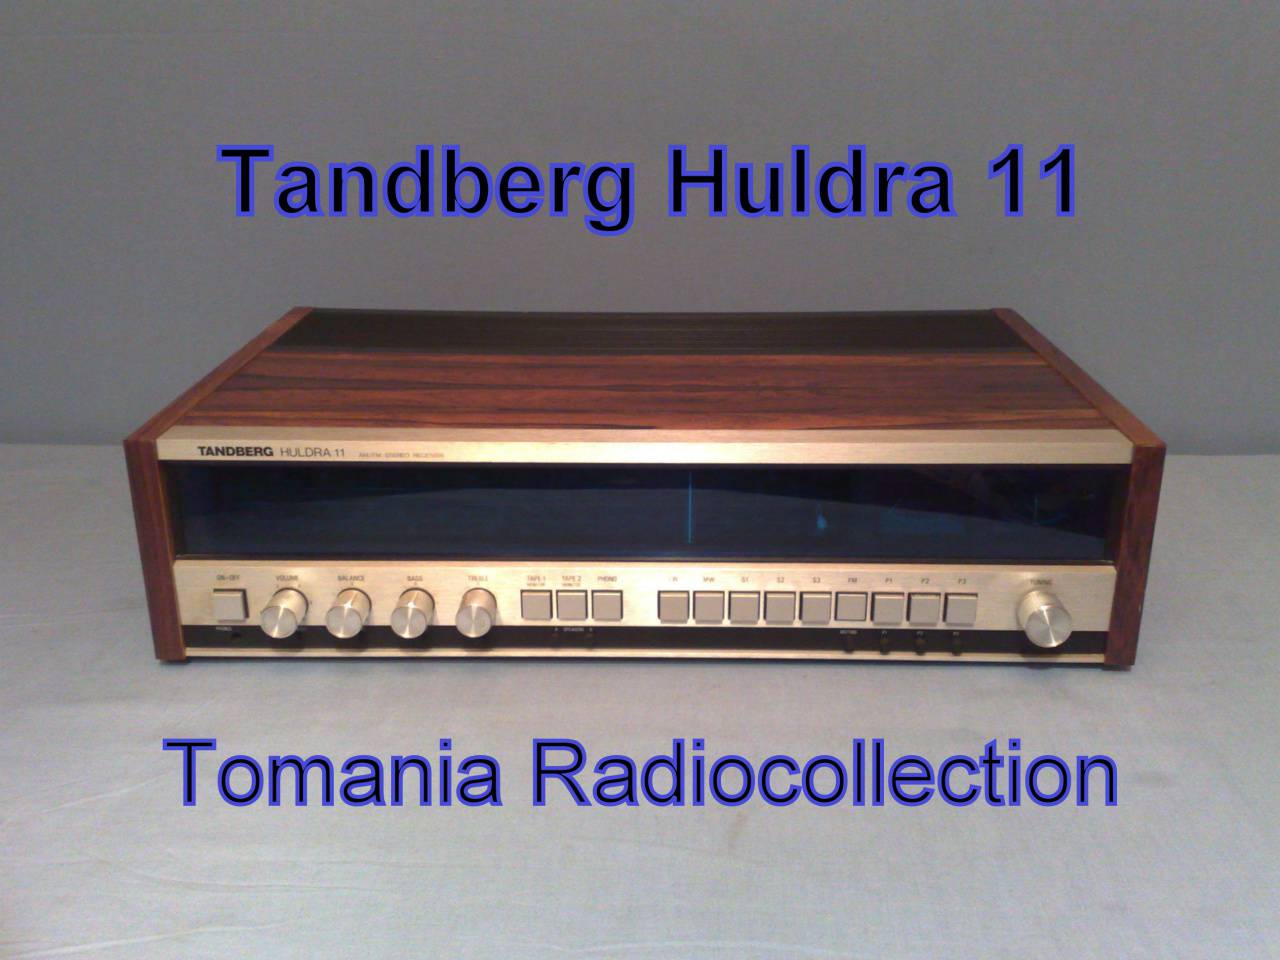 Tandberg Huldra 11